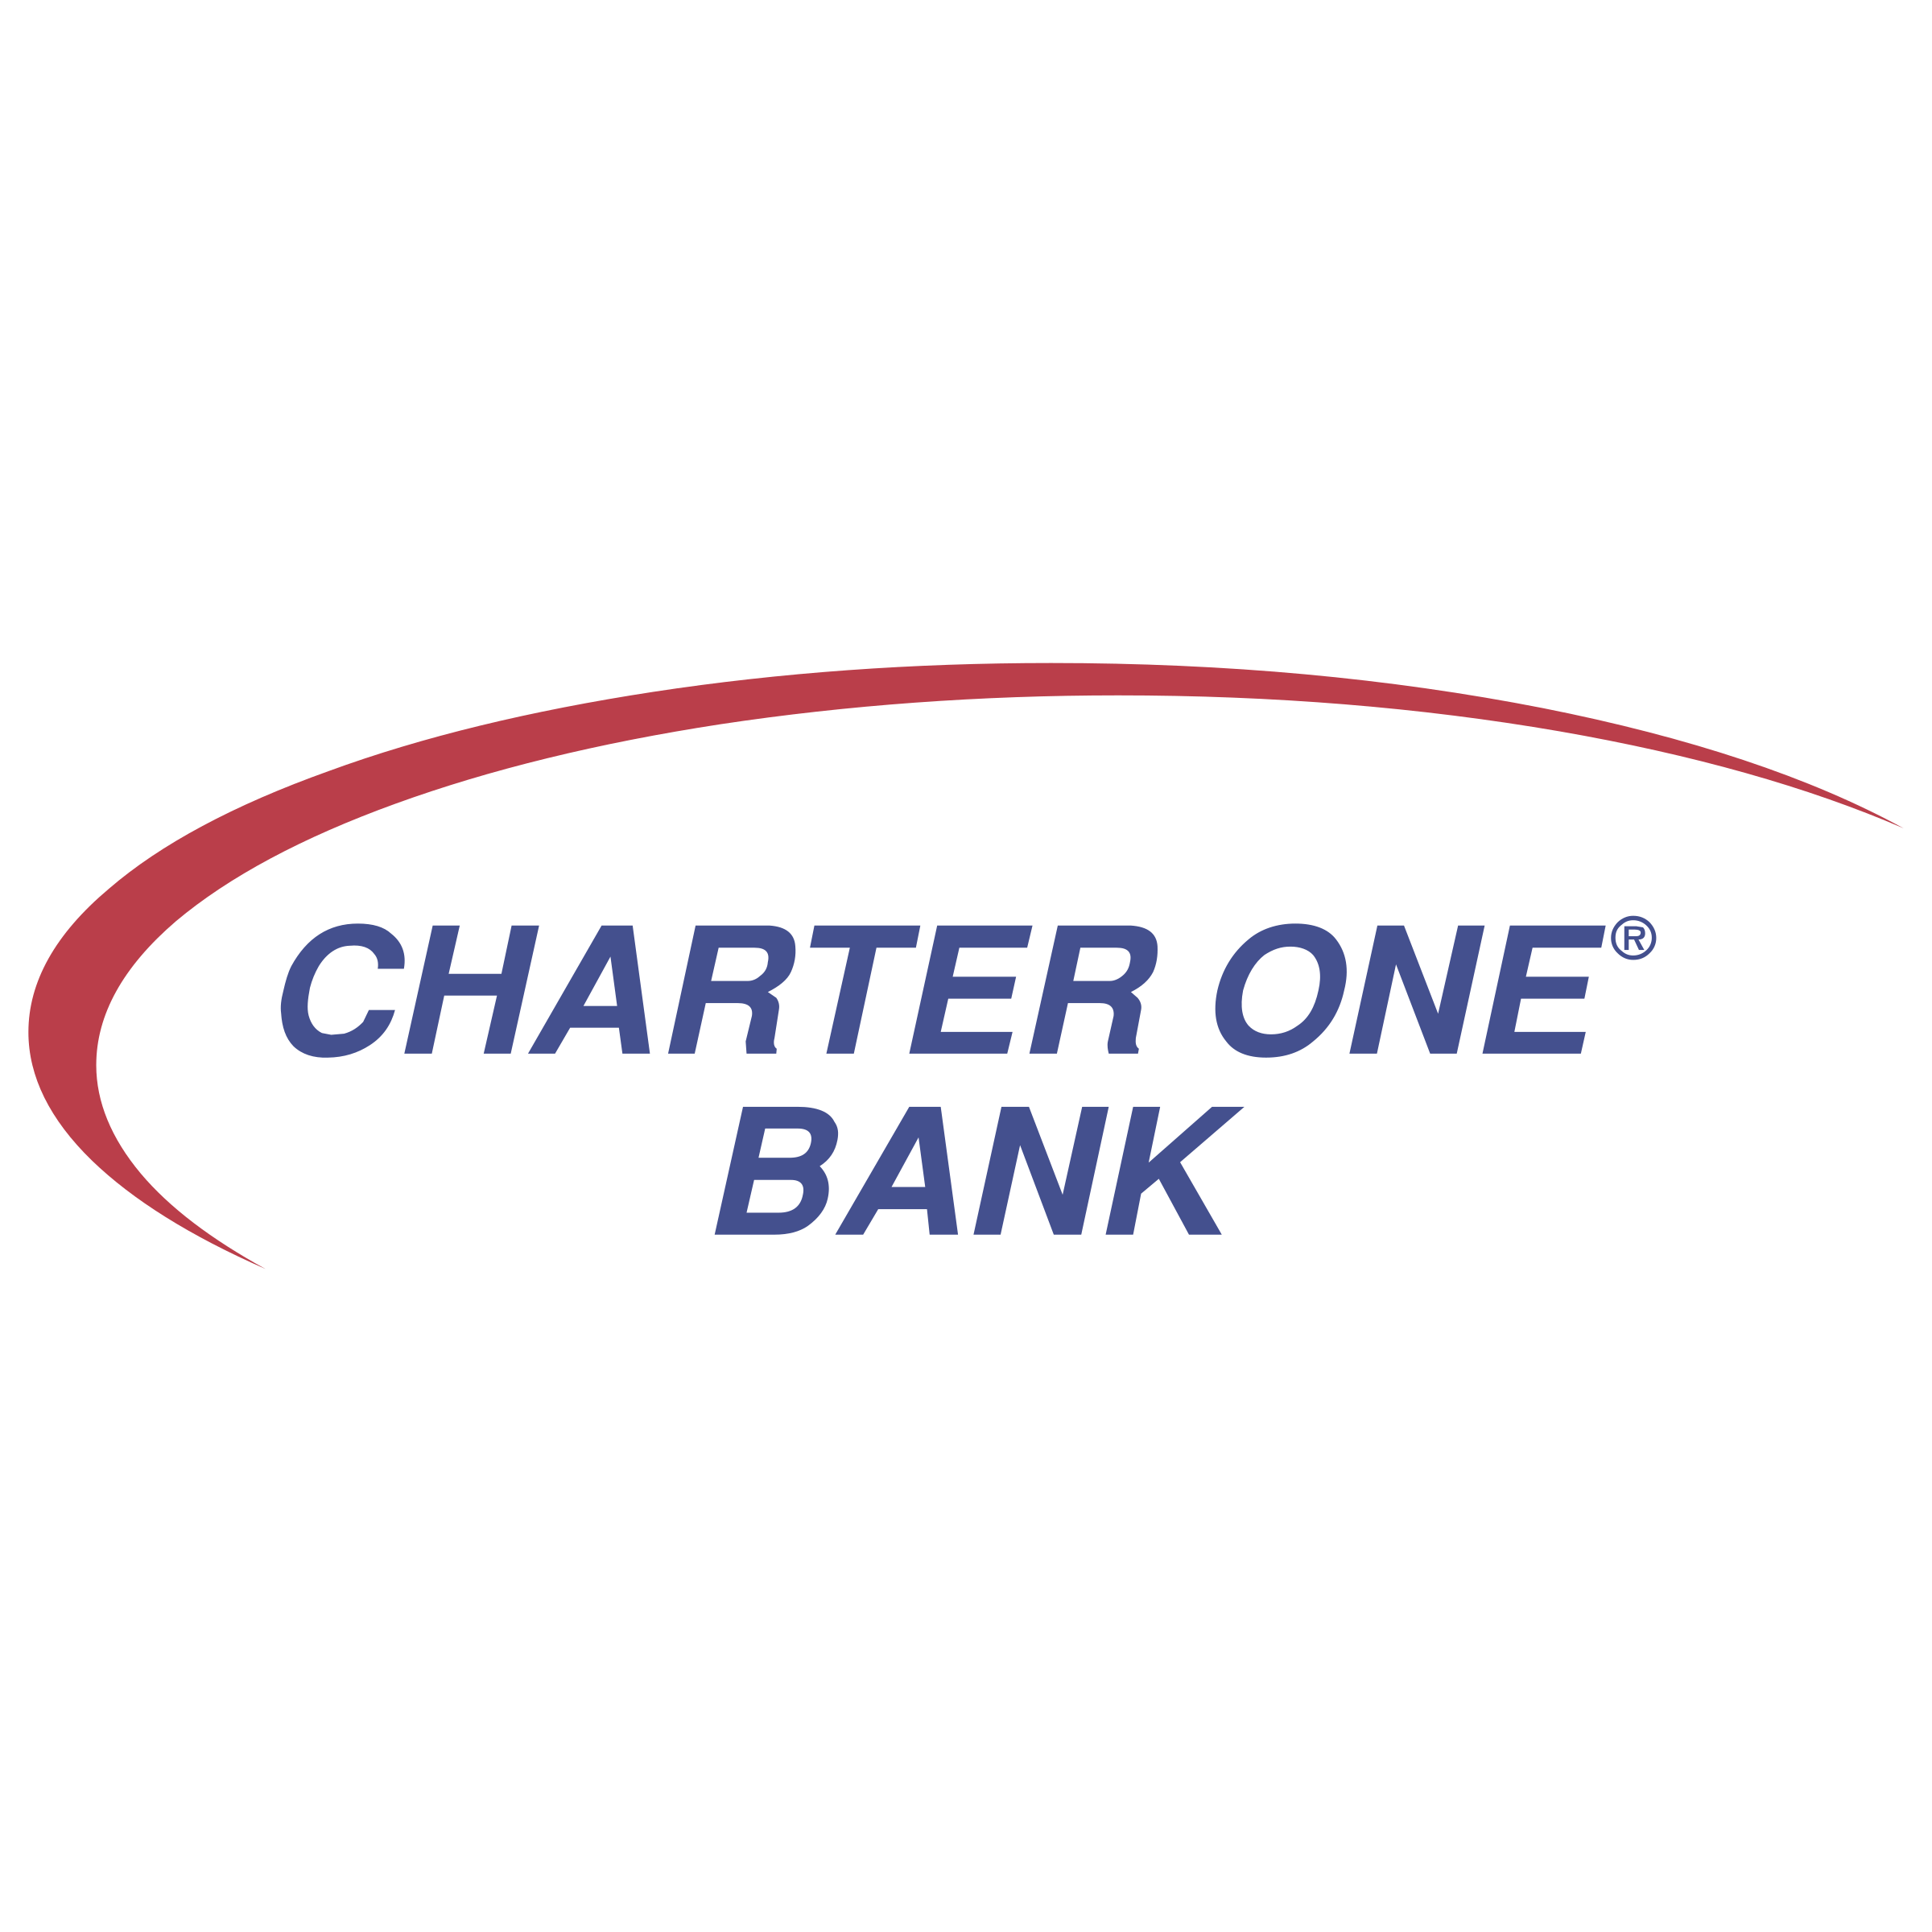 Charter Logo - Charter One Bank Logo PNG Transparent & SVG Vector - Freebie Supply